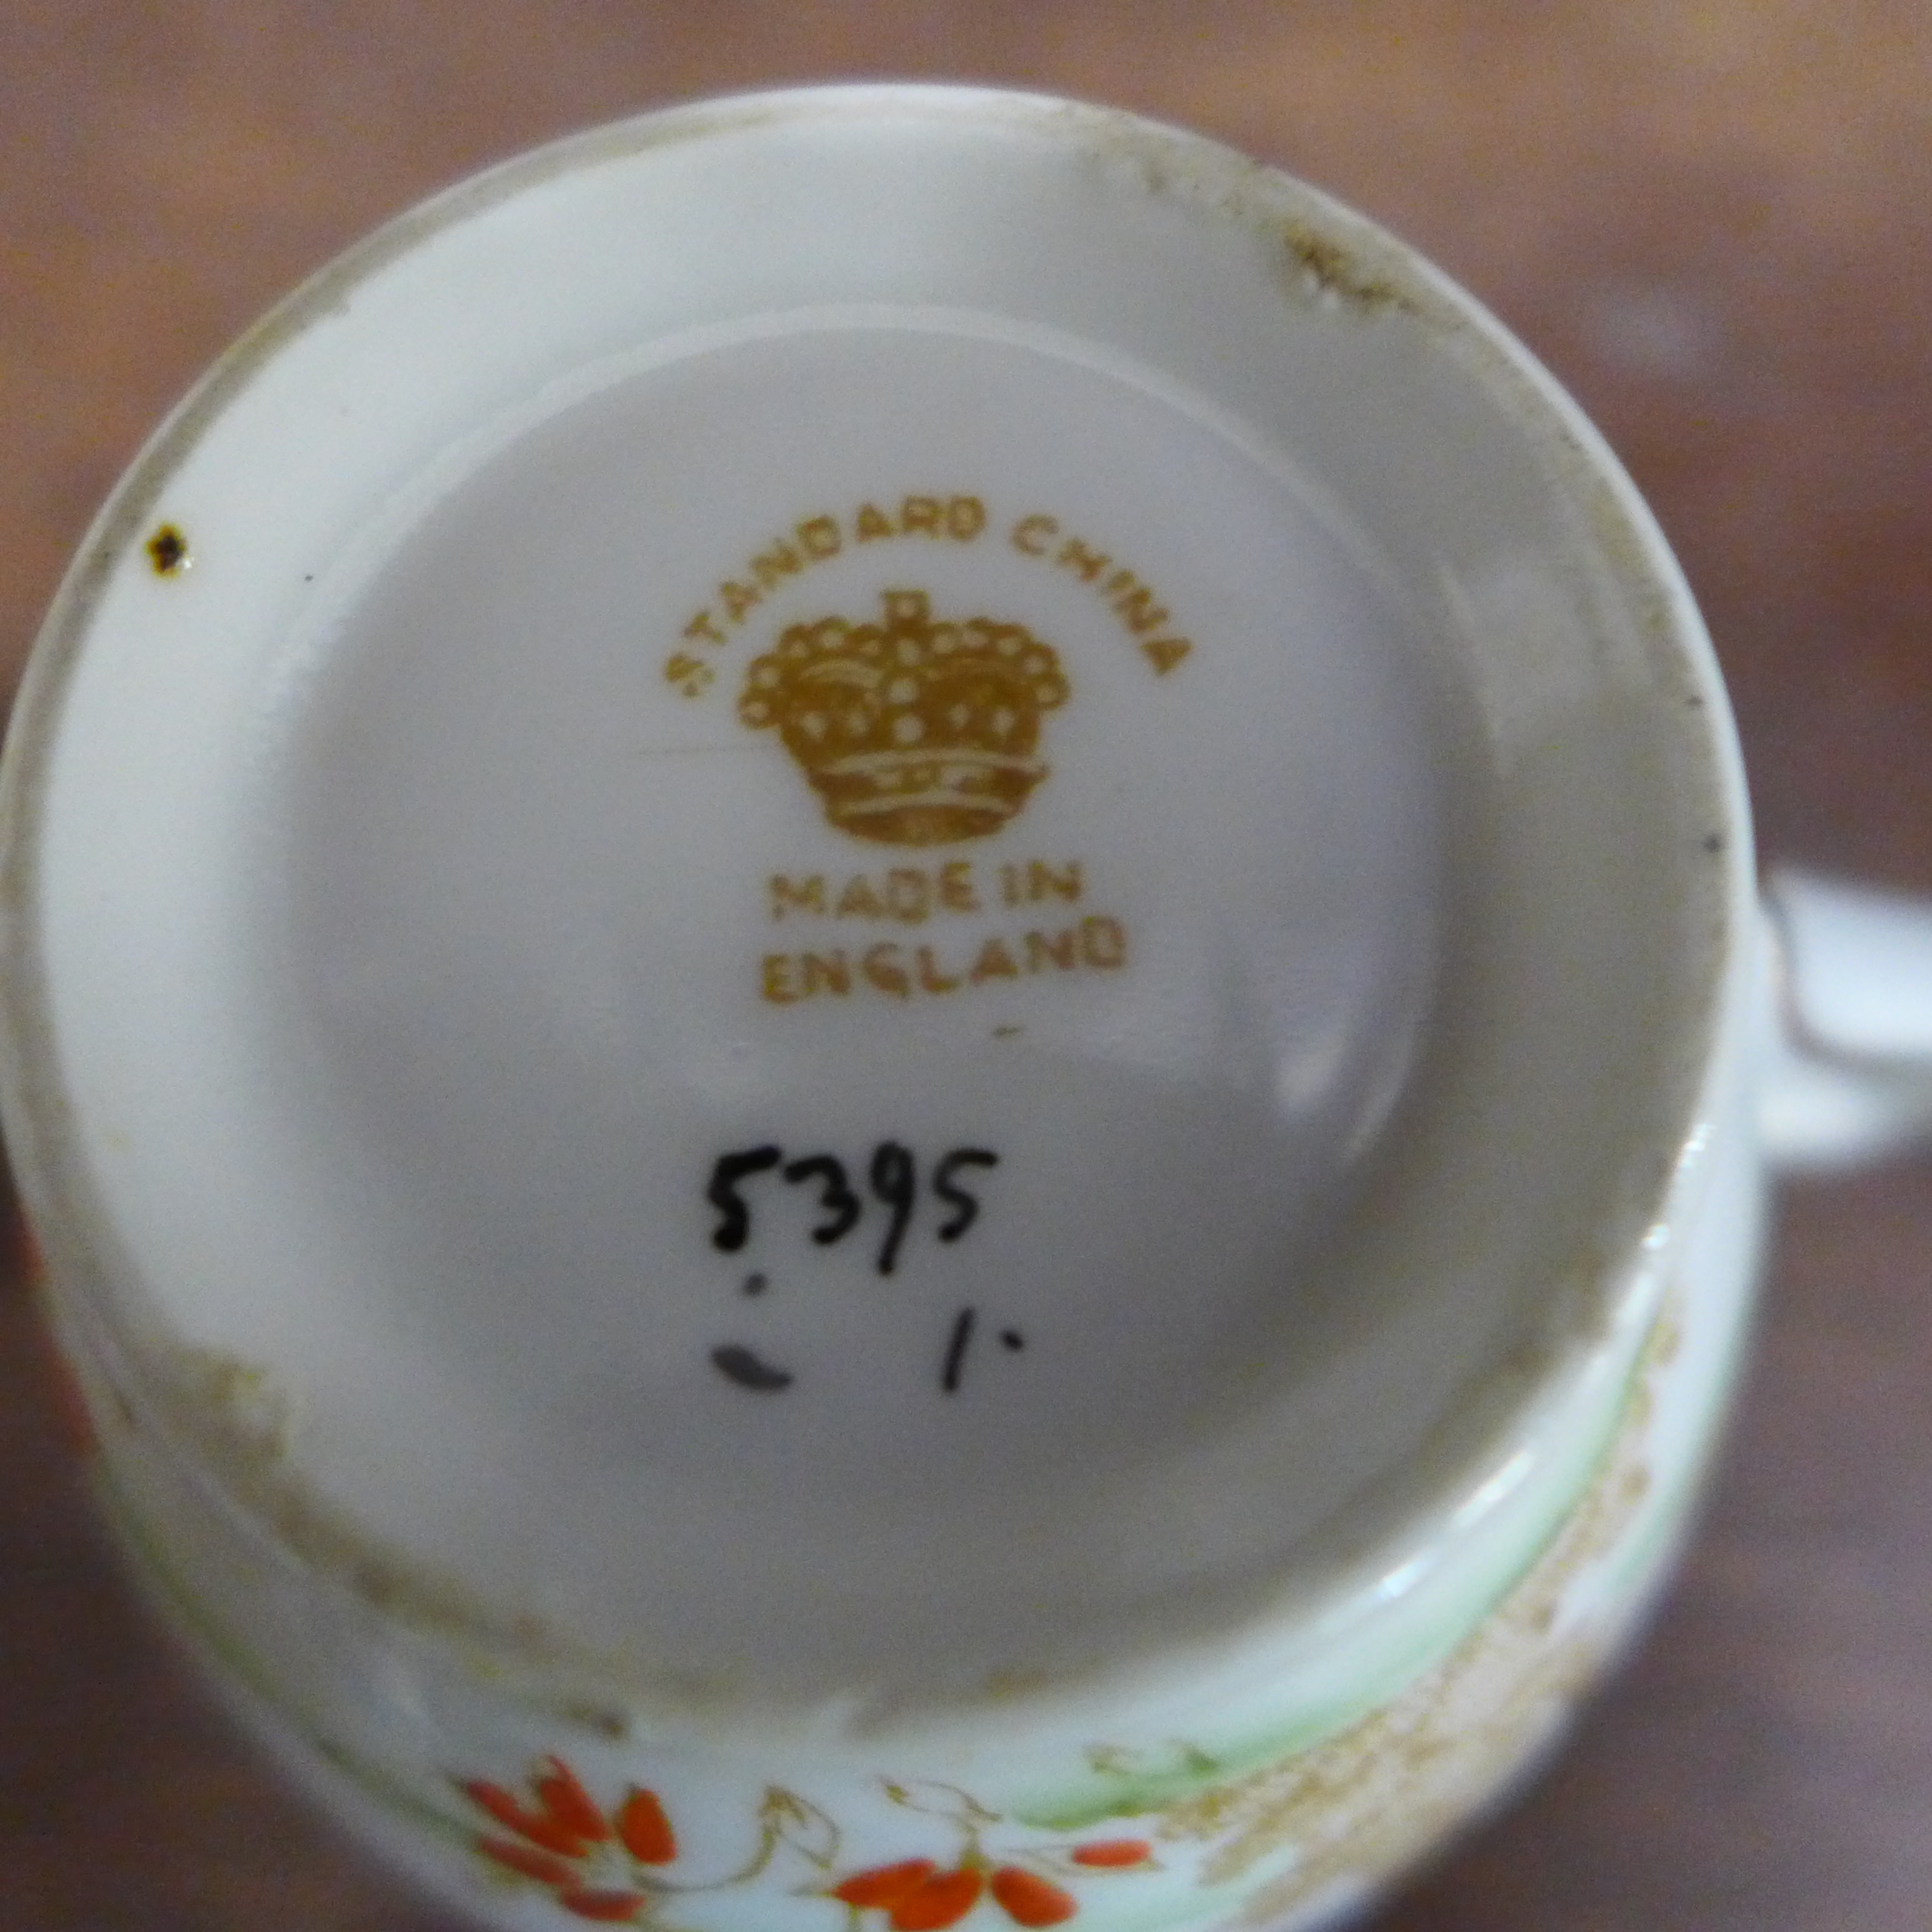 A Standard China Art Deco six setting tea set, with cream, sugar, water jug and teapot - Image 2 of 2